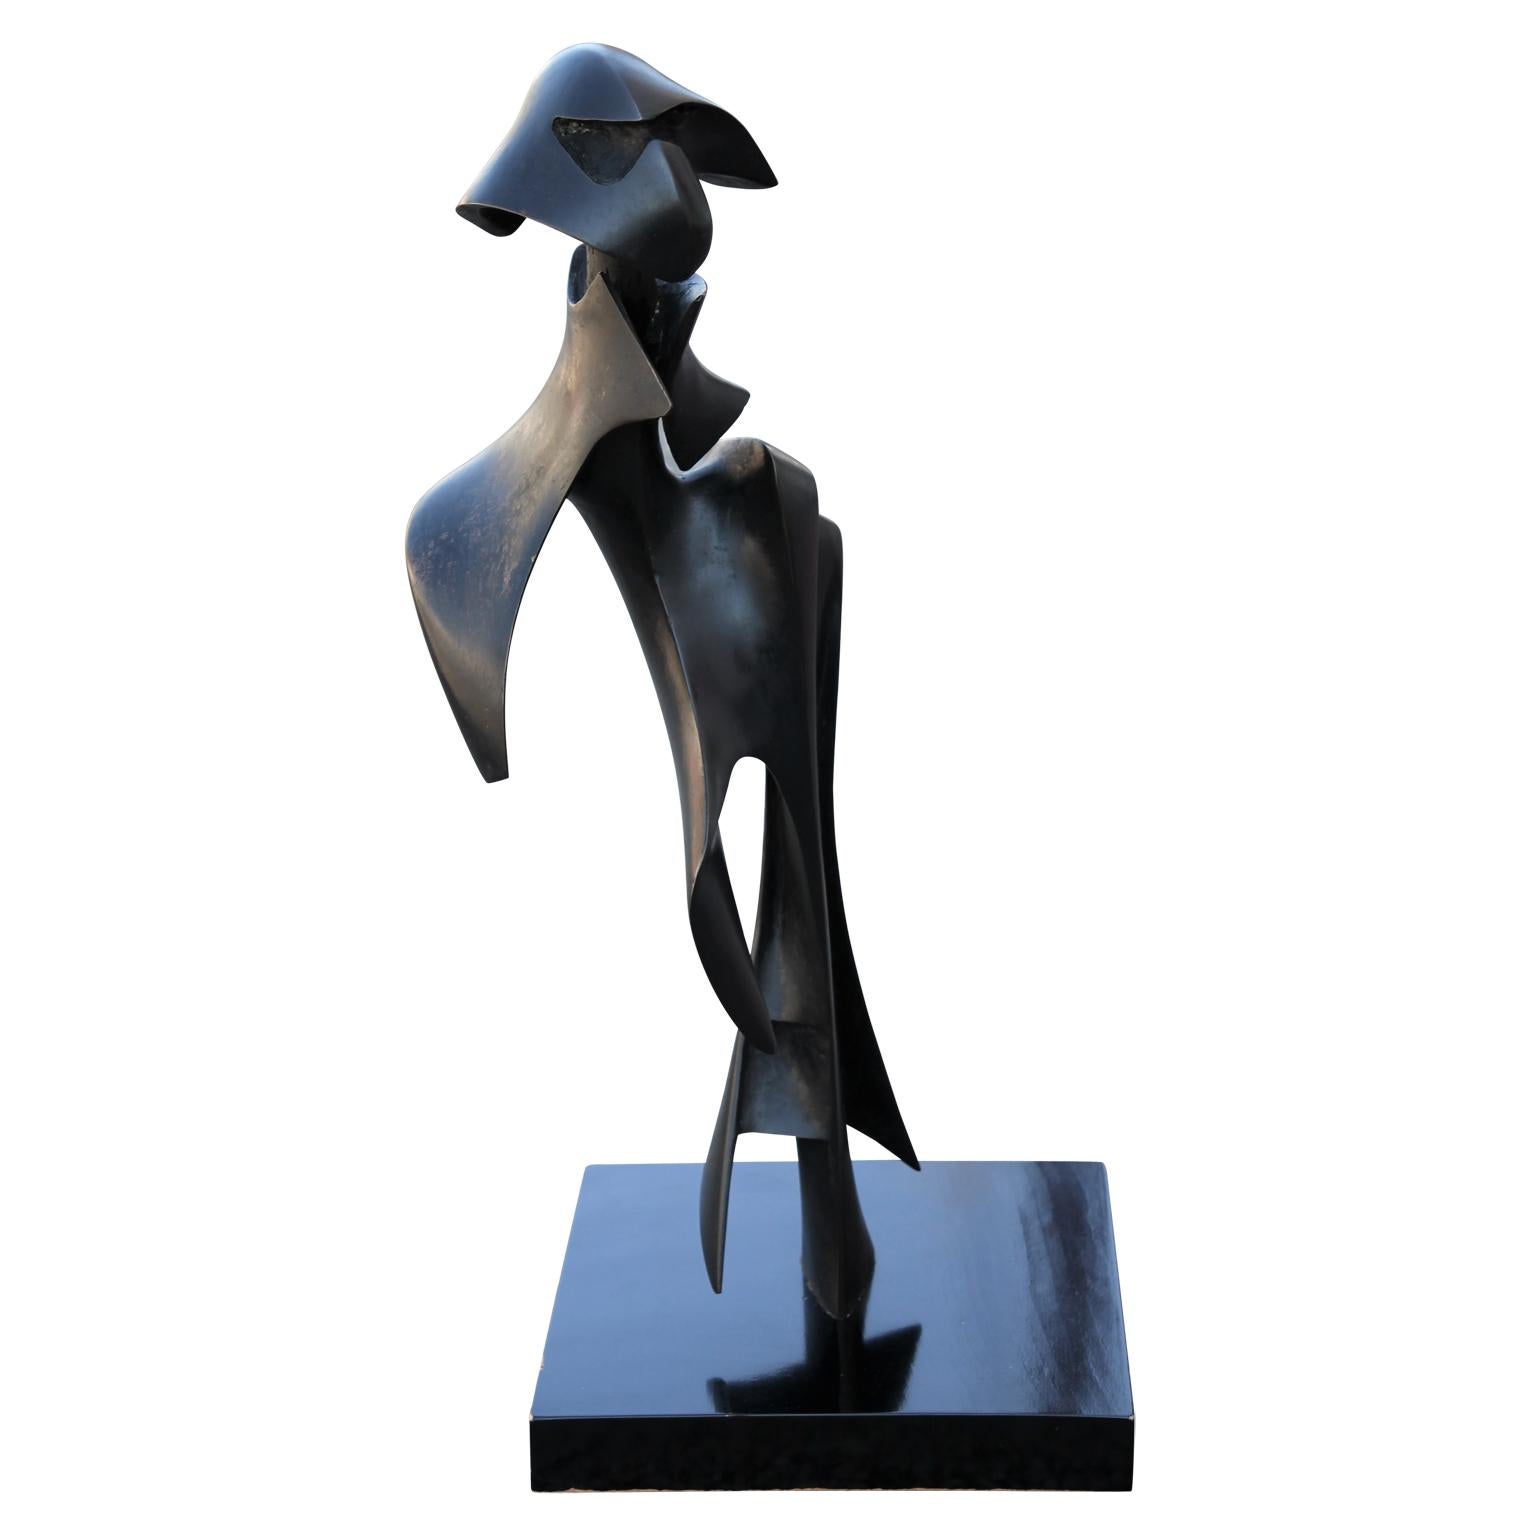 Stephen Daniels Figurative Sculpture - "Black Knight" Abstract Figurative Bronze Sculpture